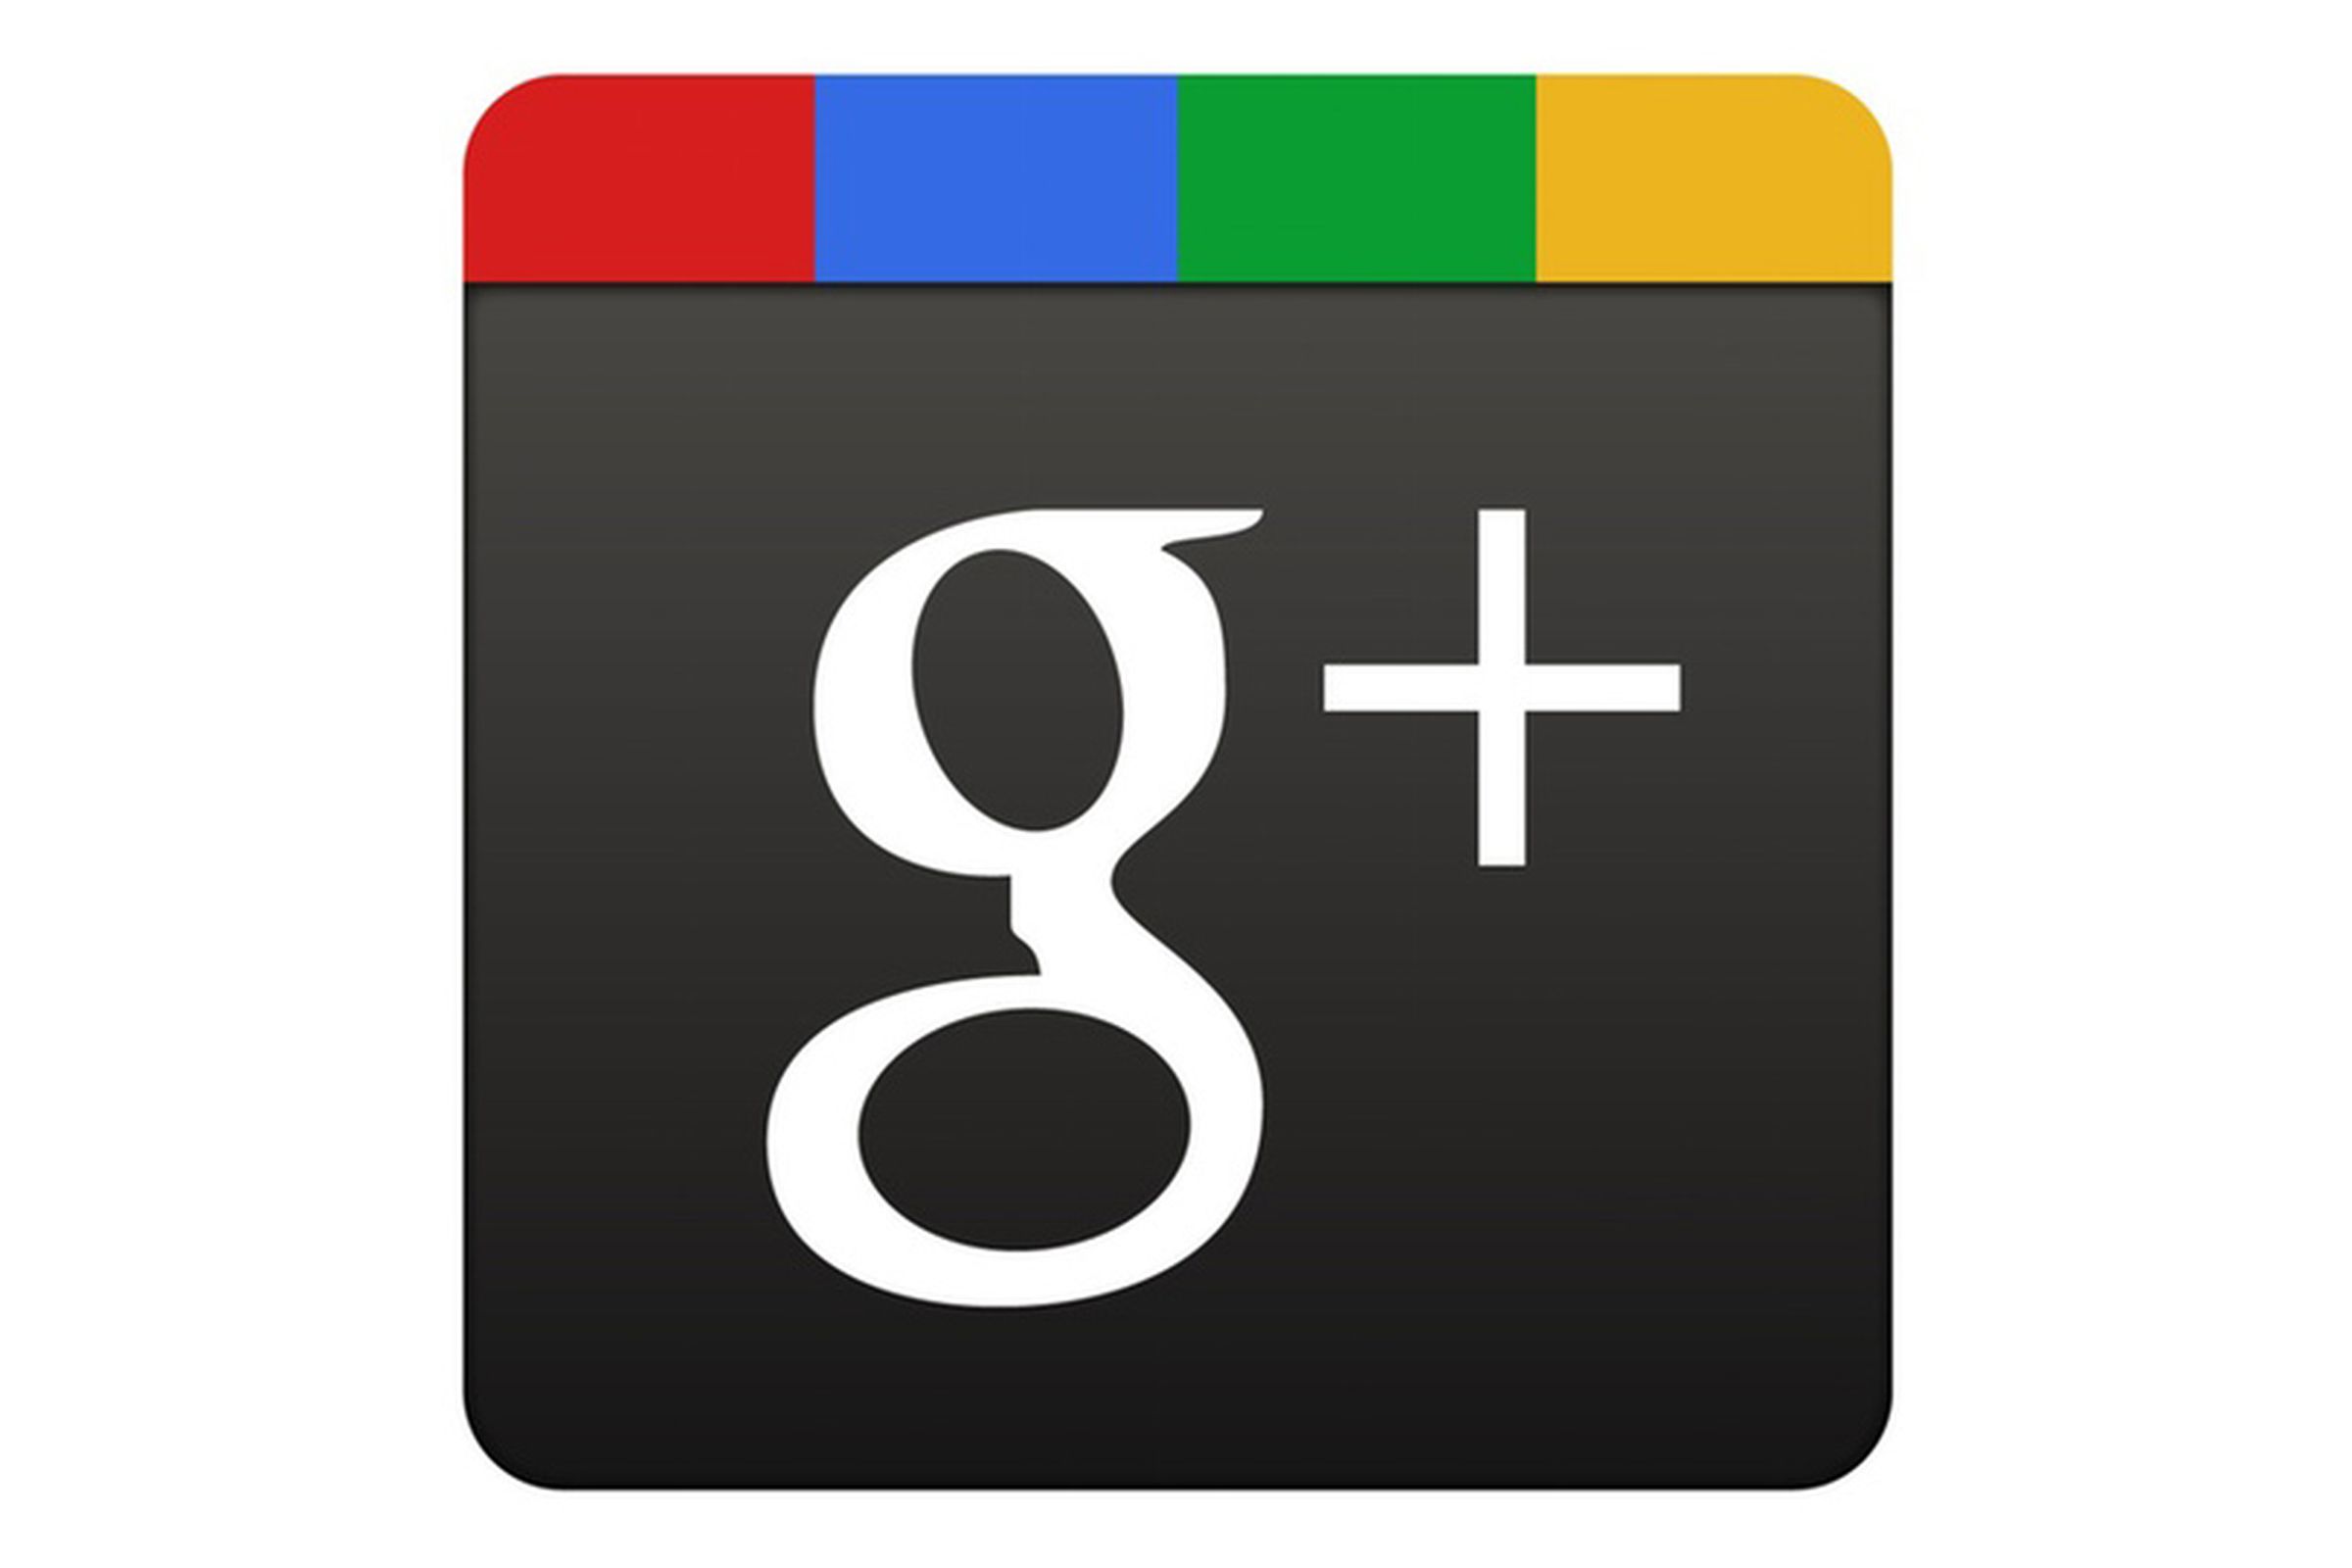 Google plus logo padded